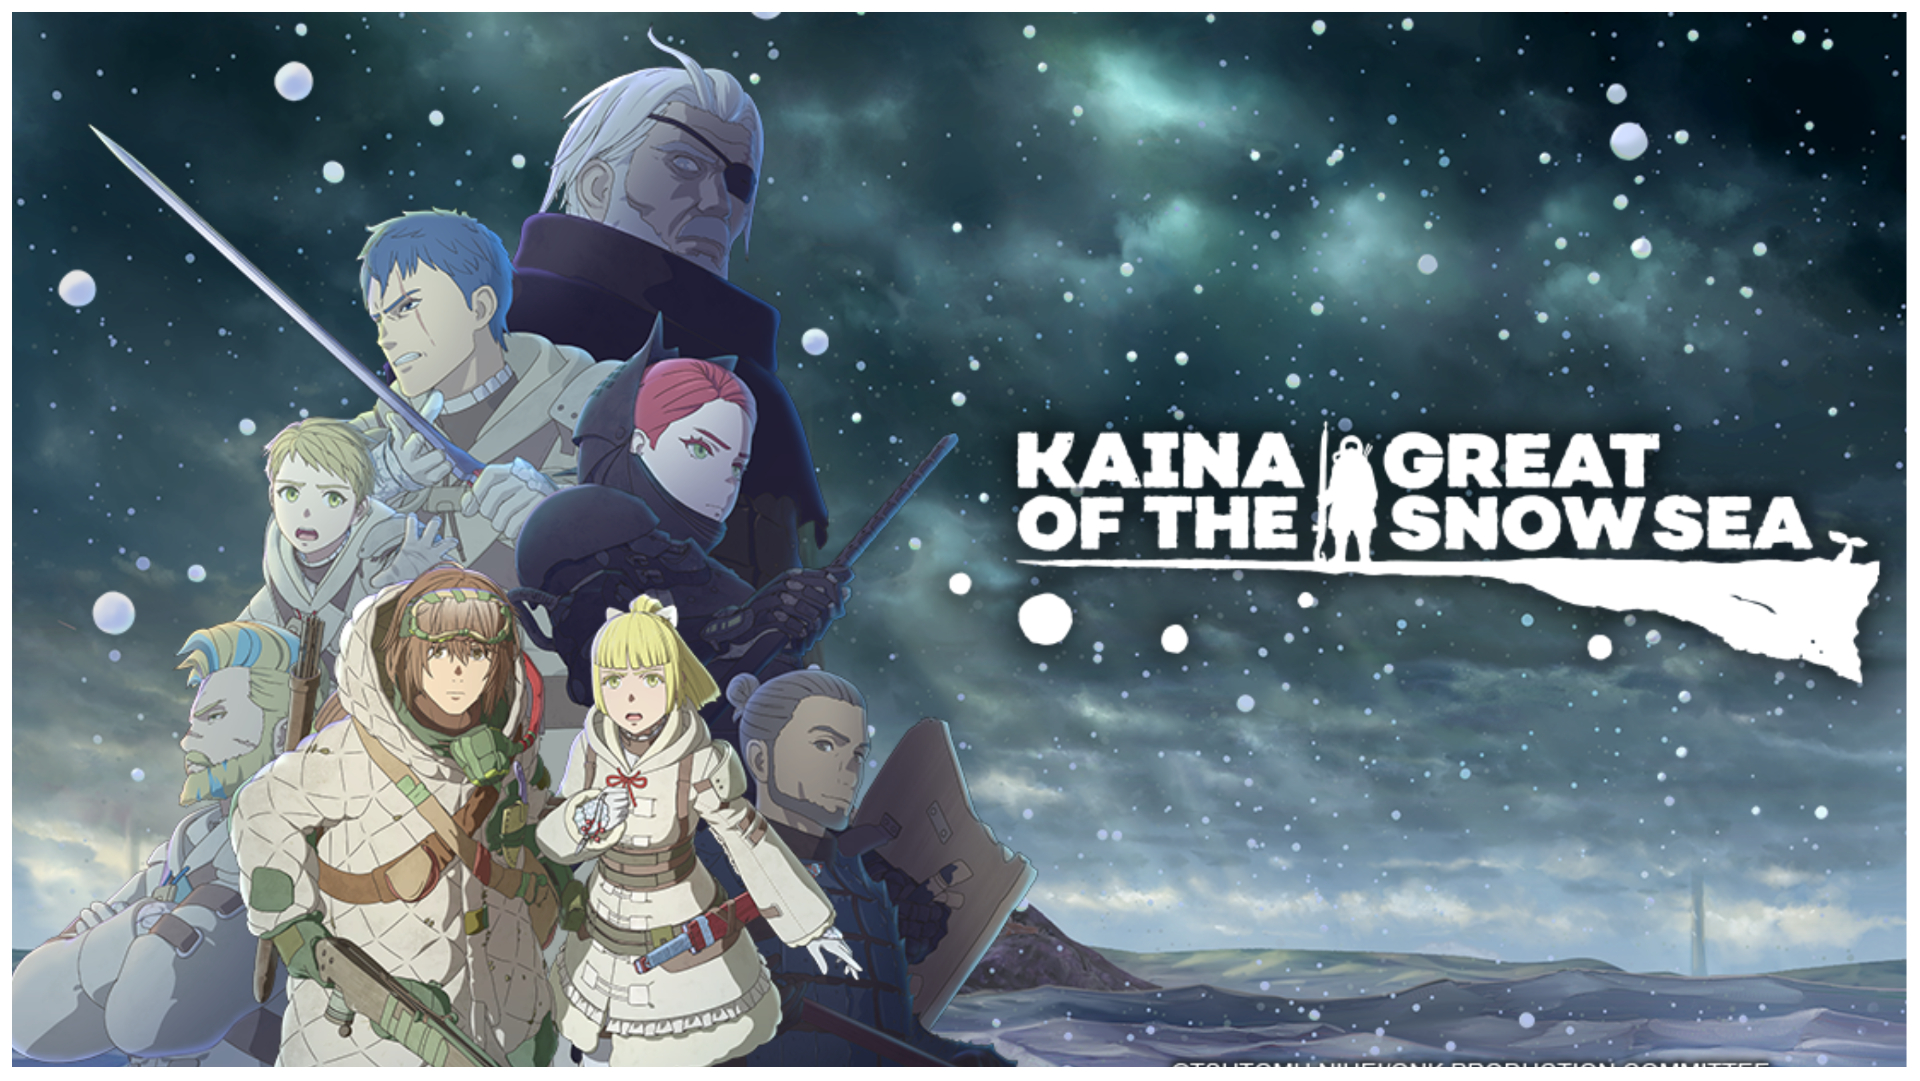 Arte principal da série de anime Kaina of the Great Snow Sea.